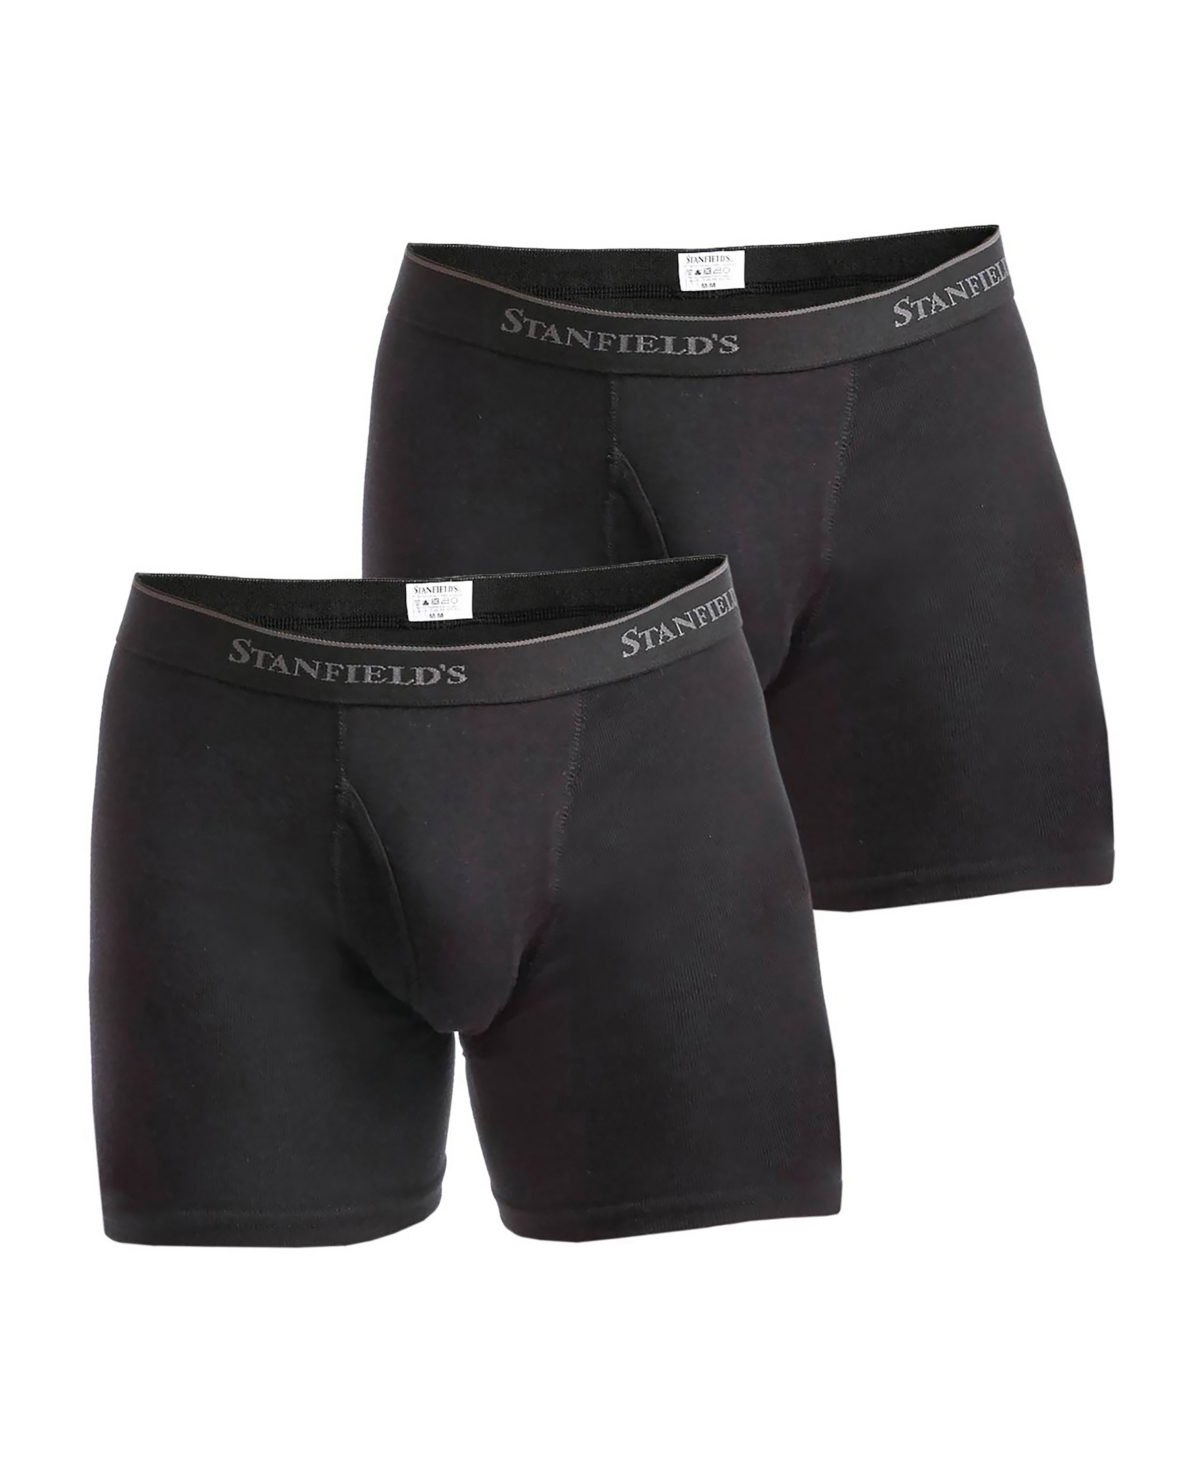 Stanfield's Men's Supreme Cotton Blend Boxer Briefs, Pack of 2 - Black